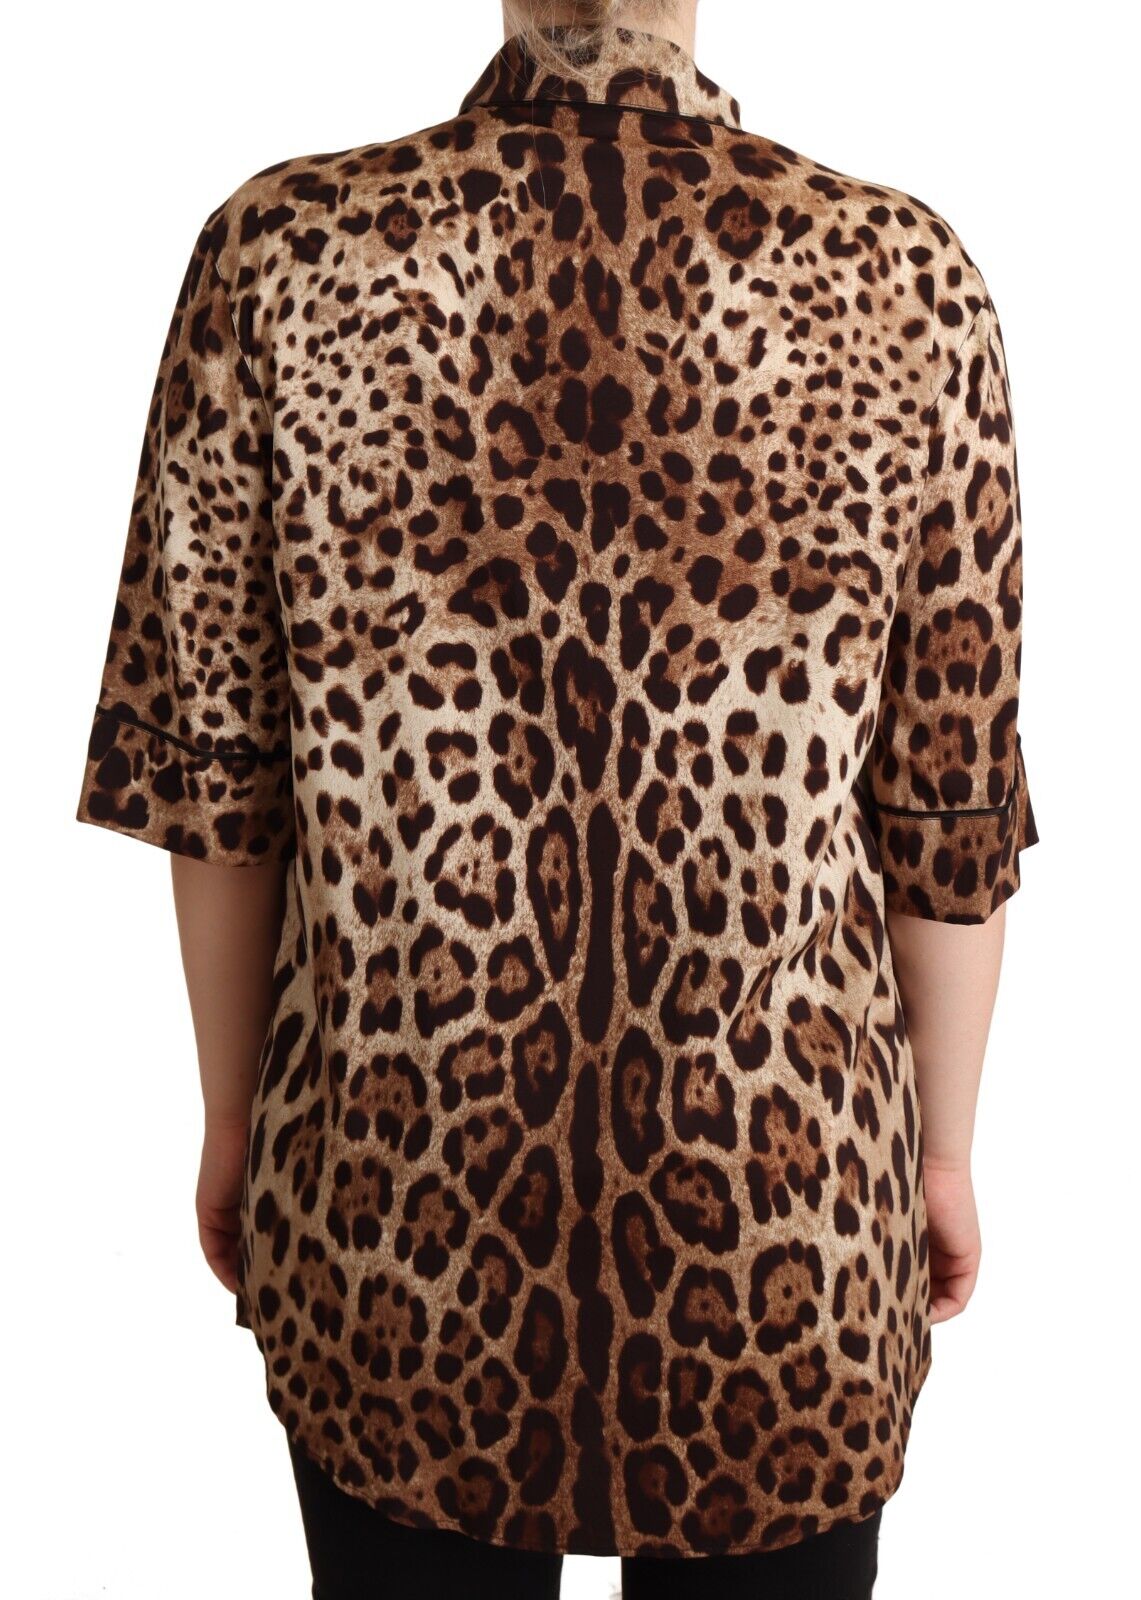 Brown Leopard Print Short Sleeves Blouse Shirt